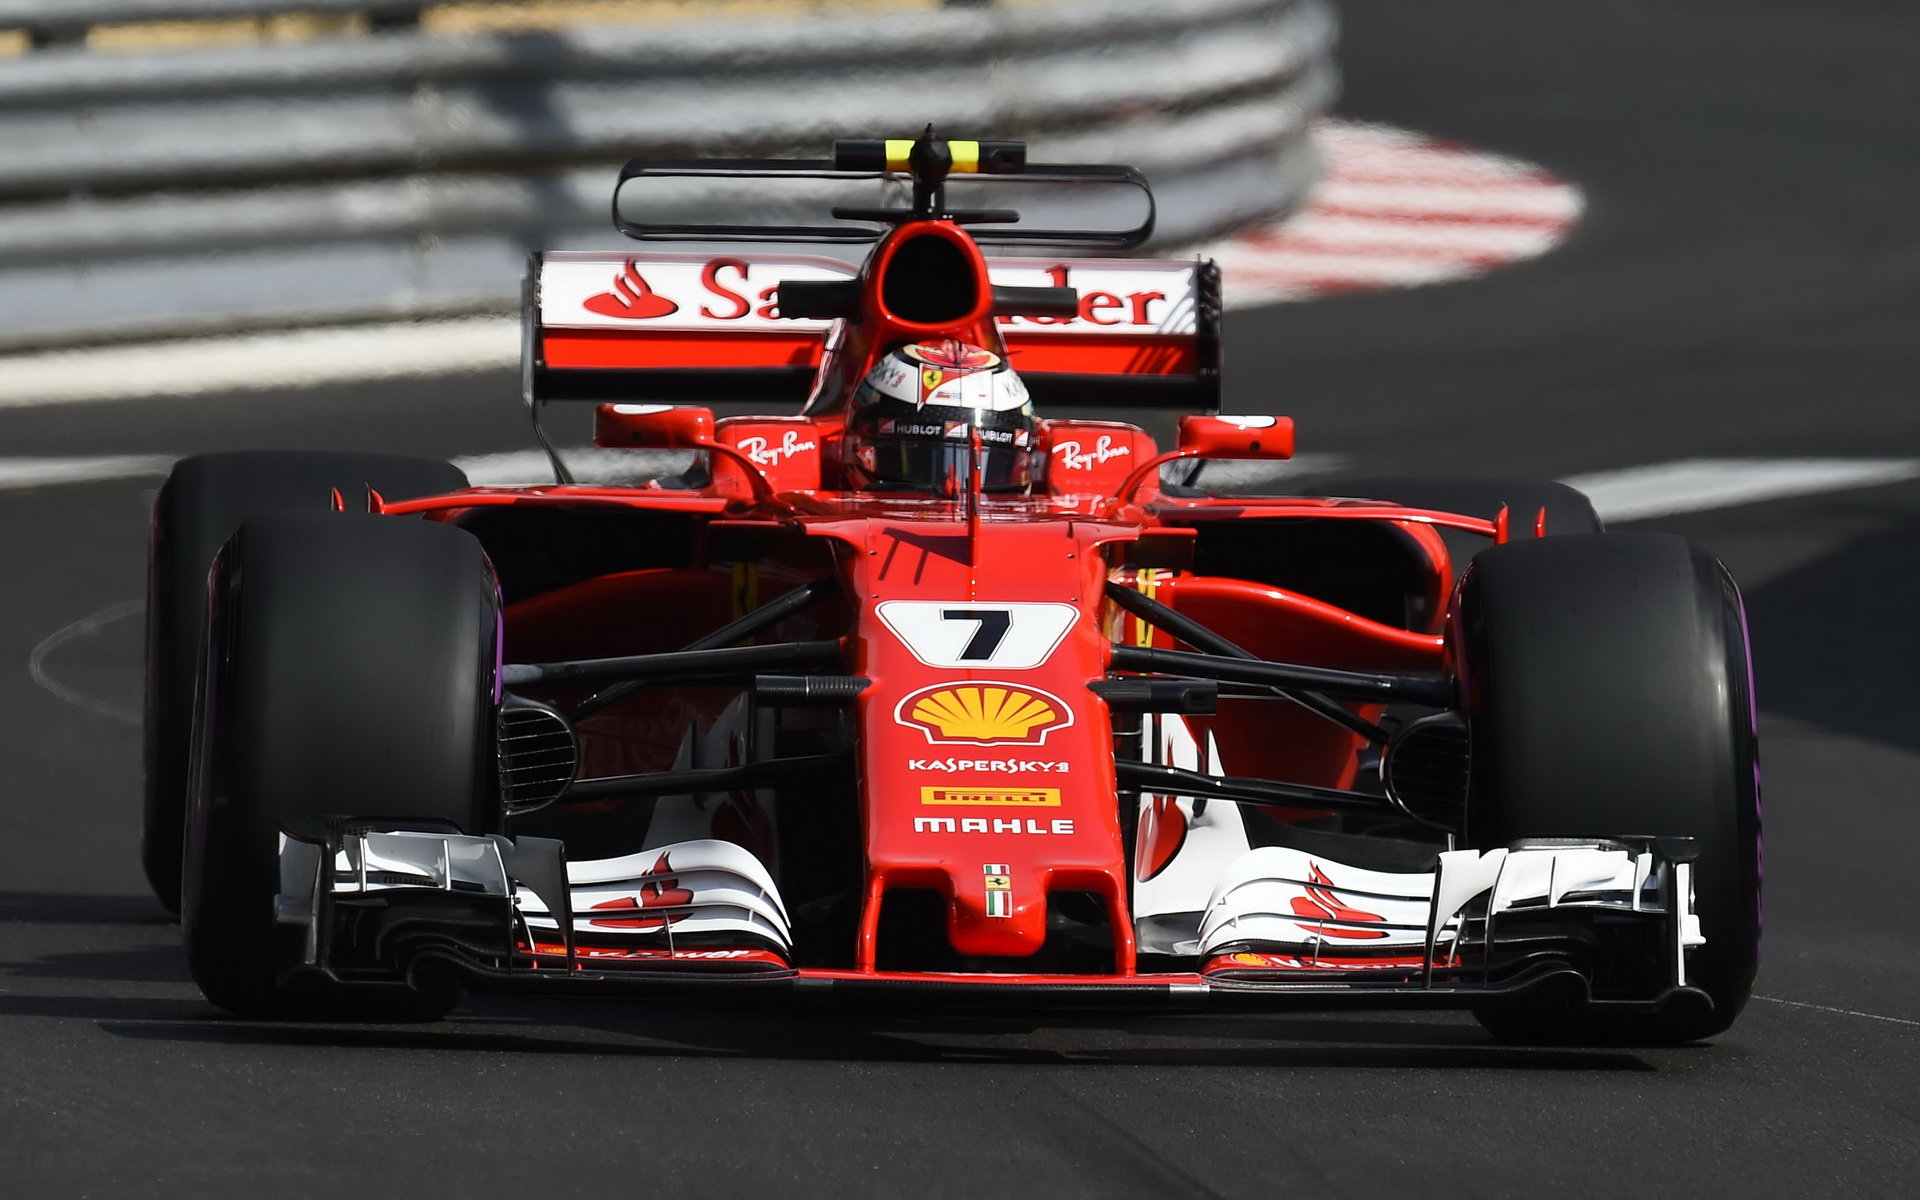 Kimi Räikkönen při tréninku v Monaku